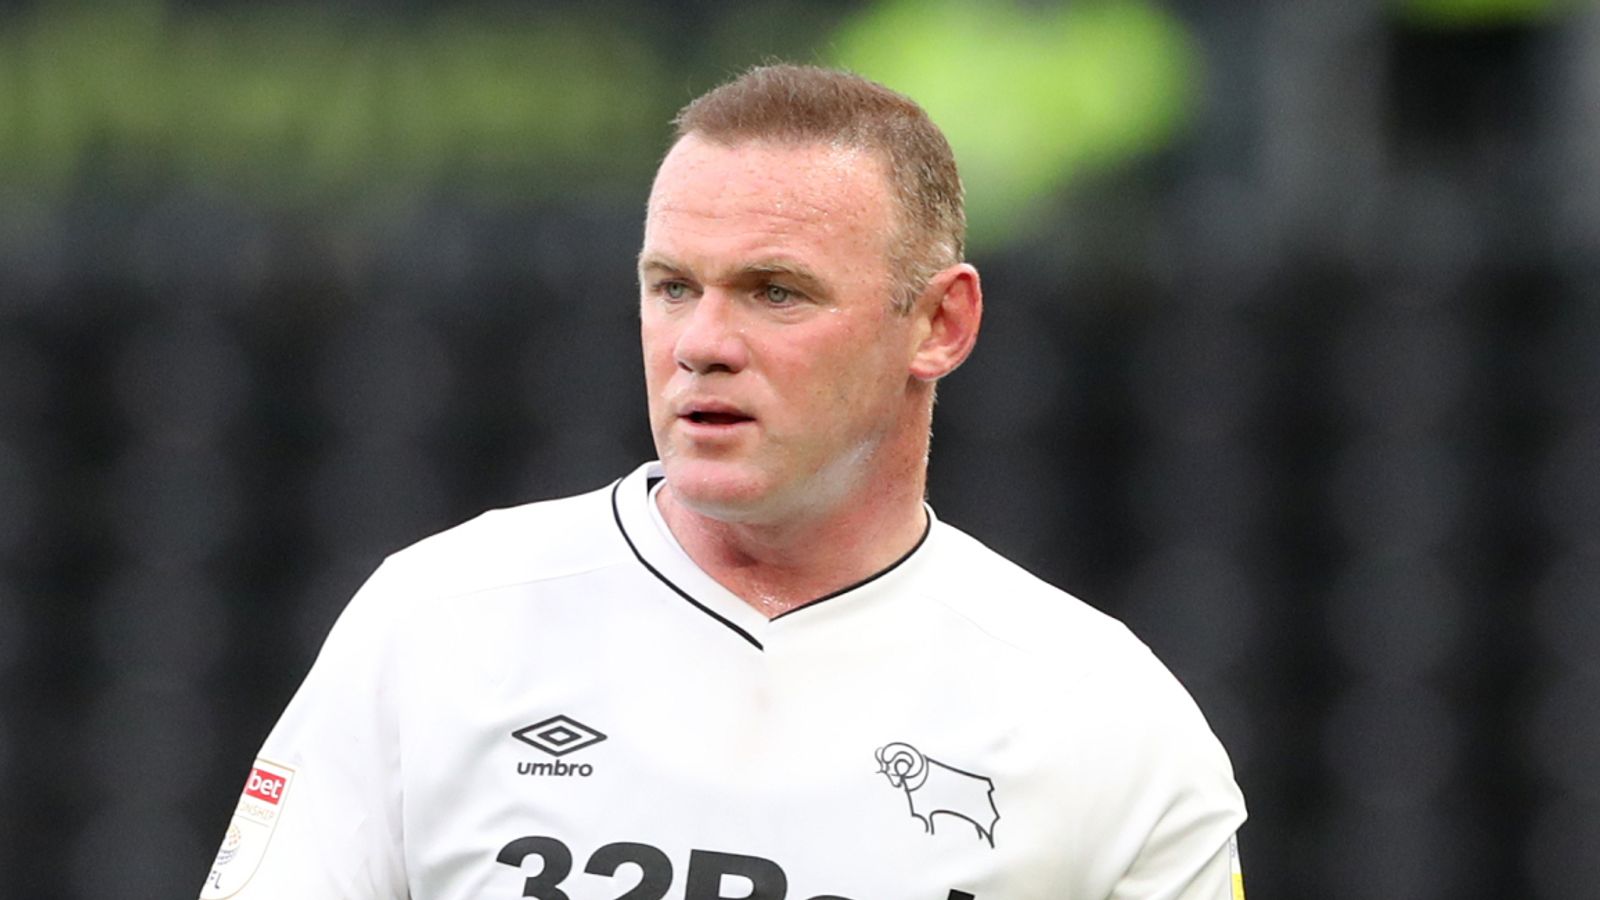 Wayne Rooney Derby Player Coach In Coronavirus Confusion Football News Sky Sports